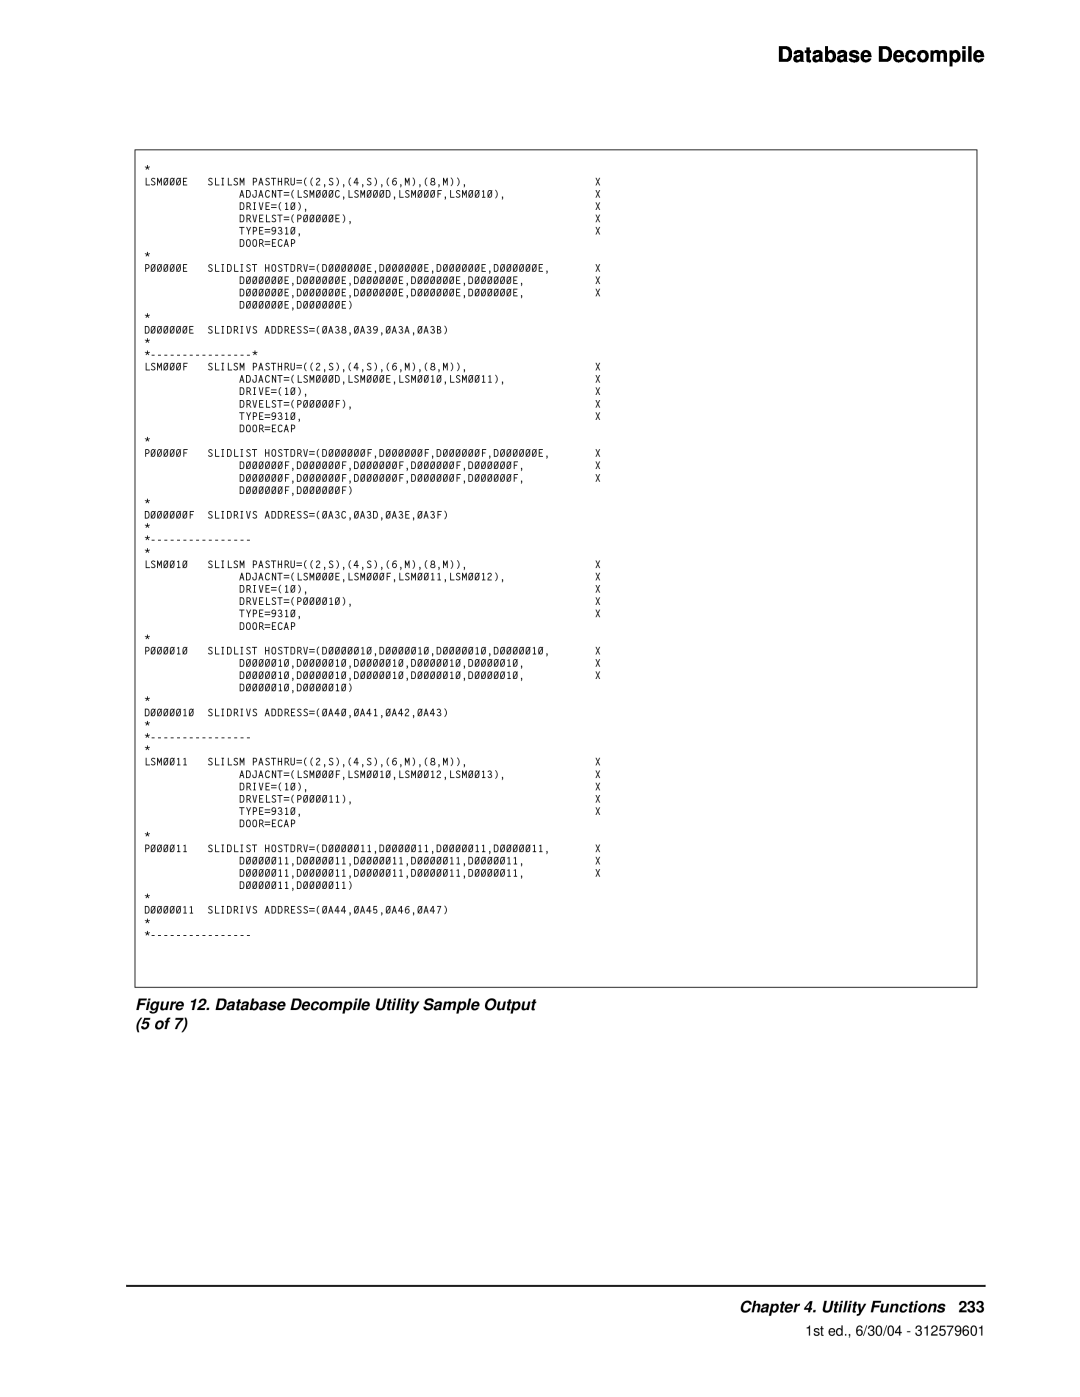 StorageTek manual Database Decompile, Utility Functions, 1st ed., 6/30/04 